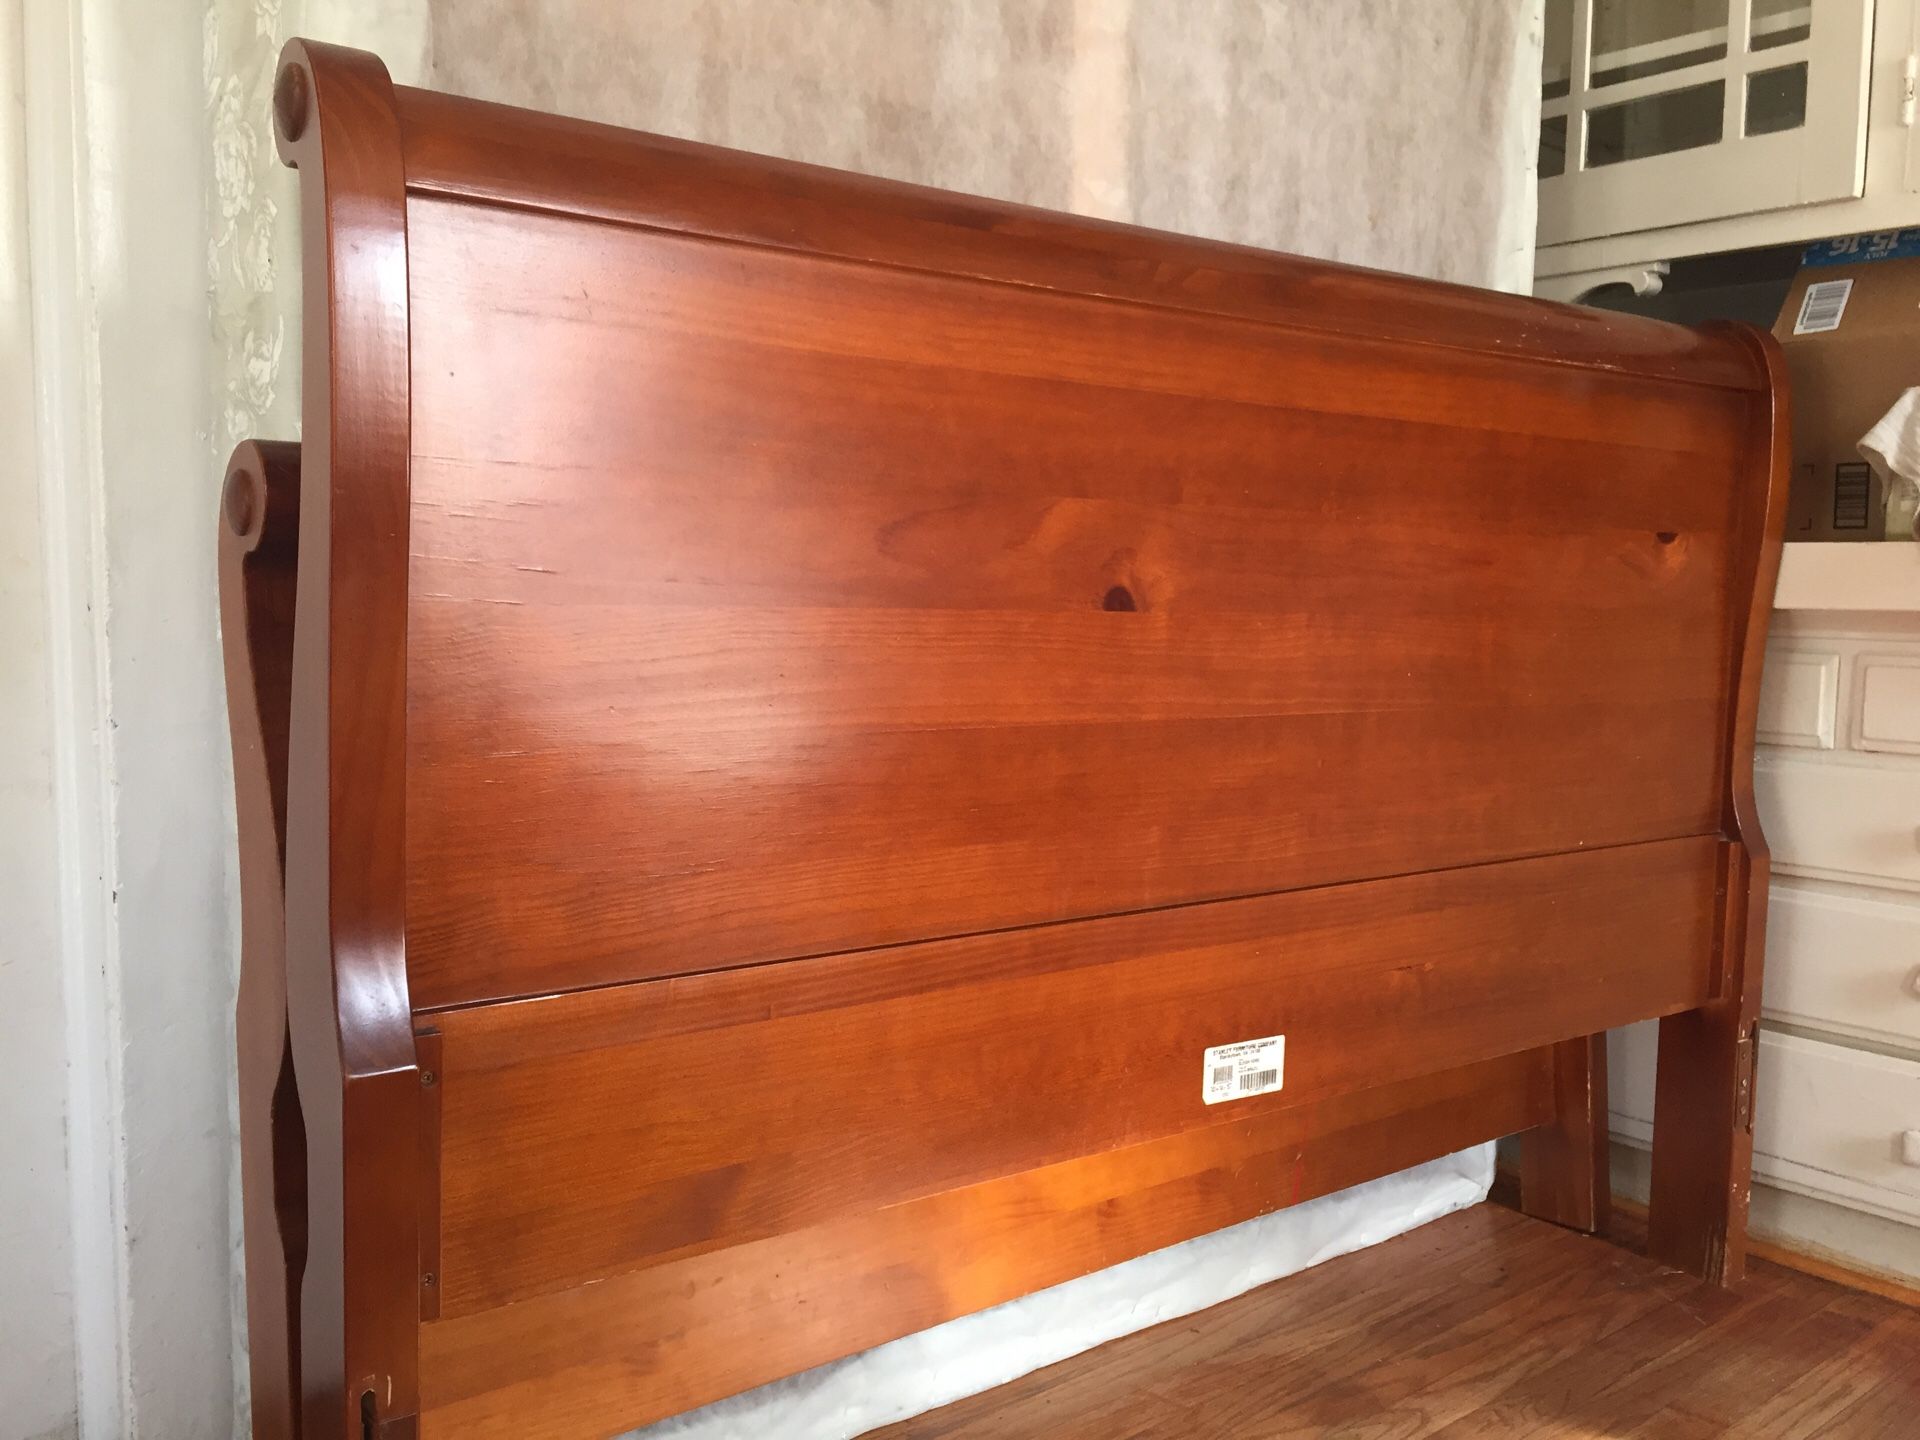 Queen wood bed frame